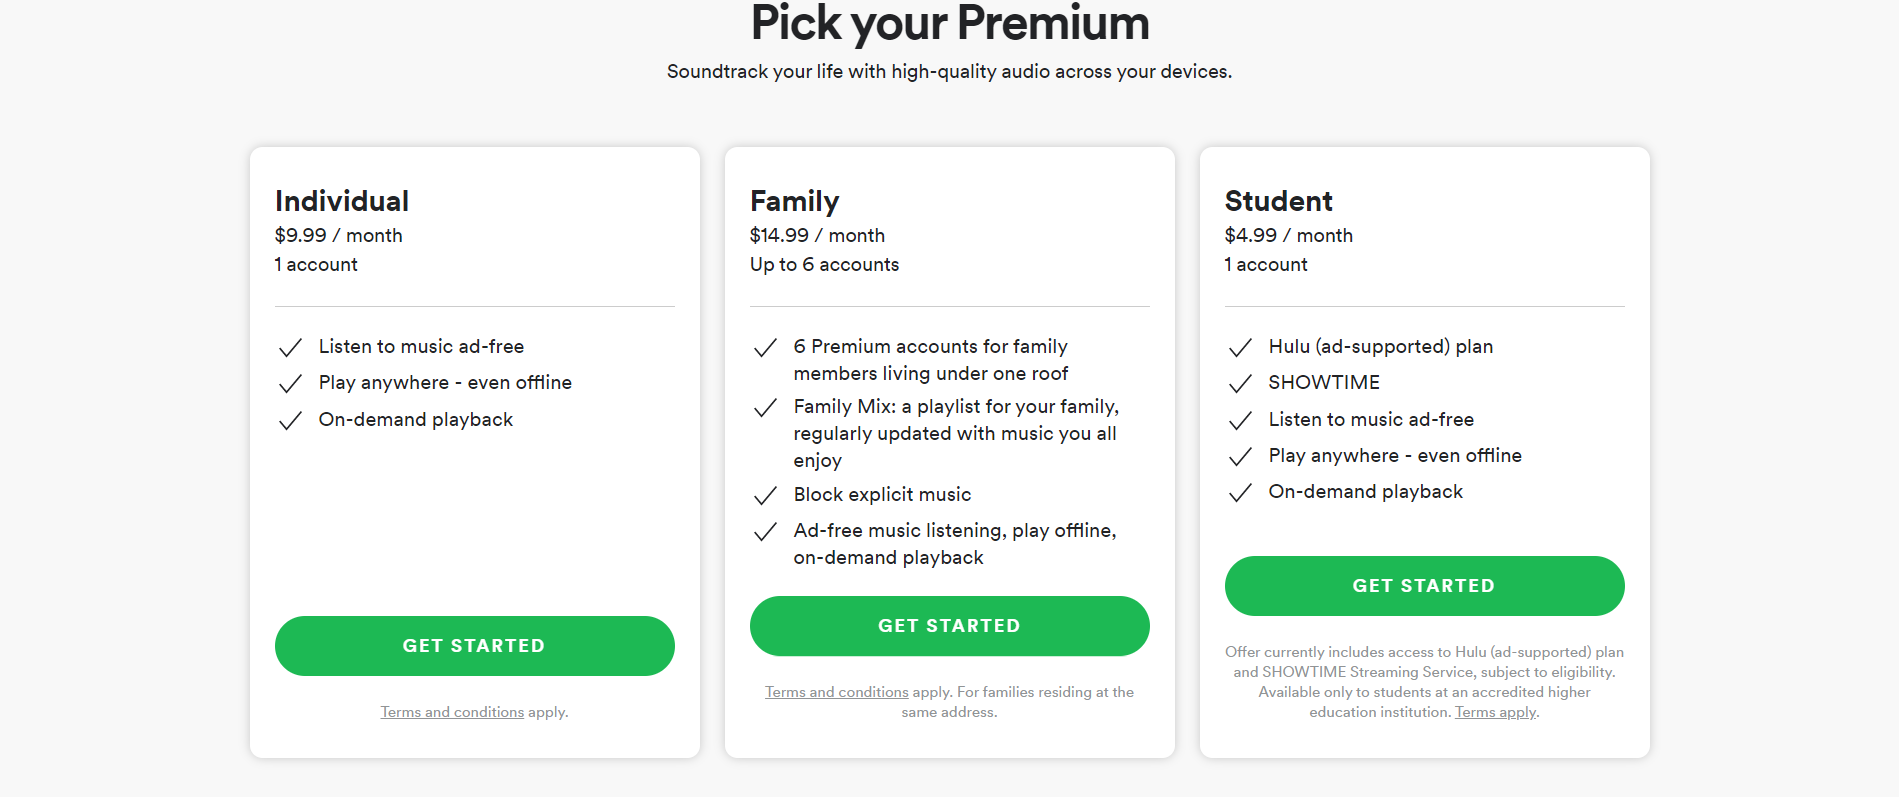 Spotify's premium plans